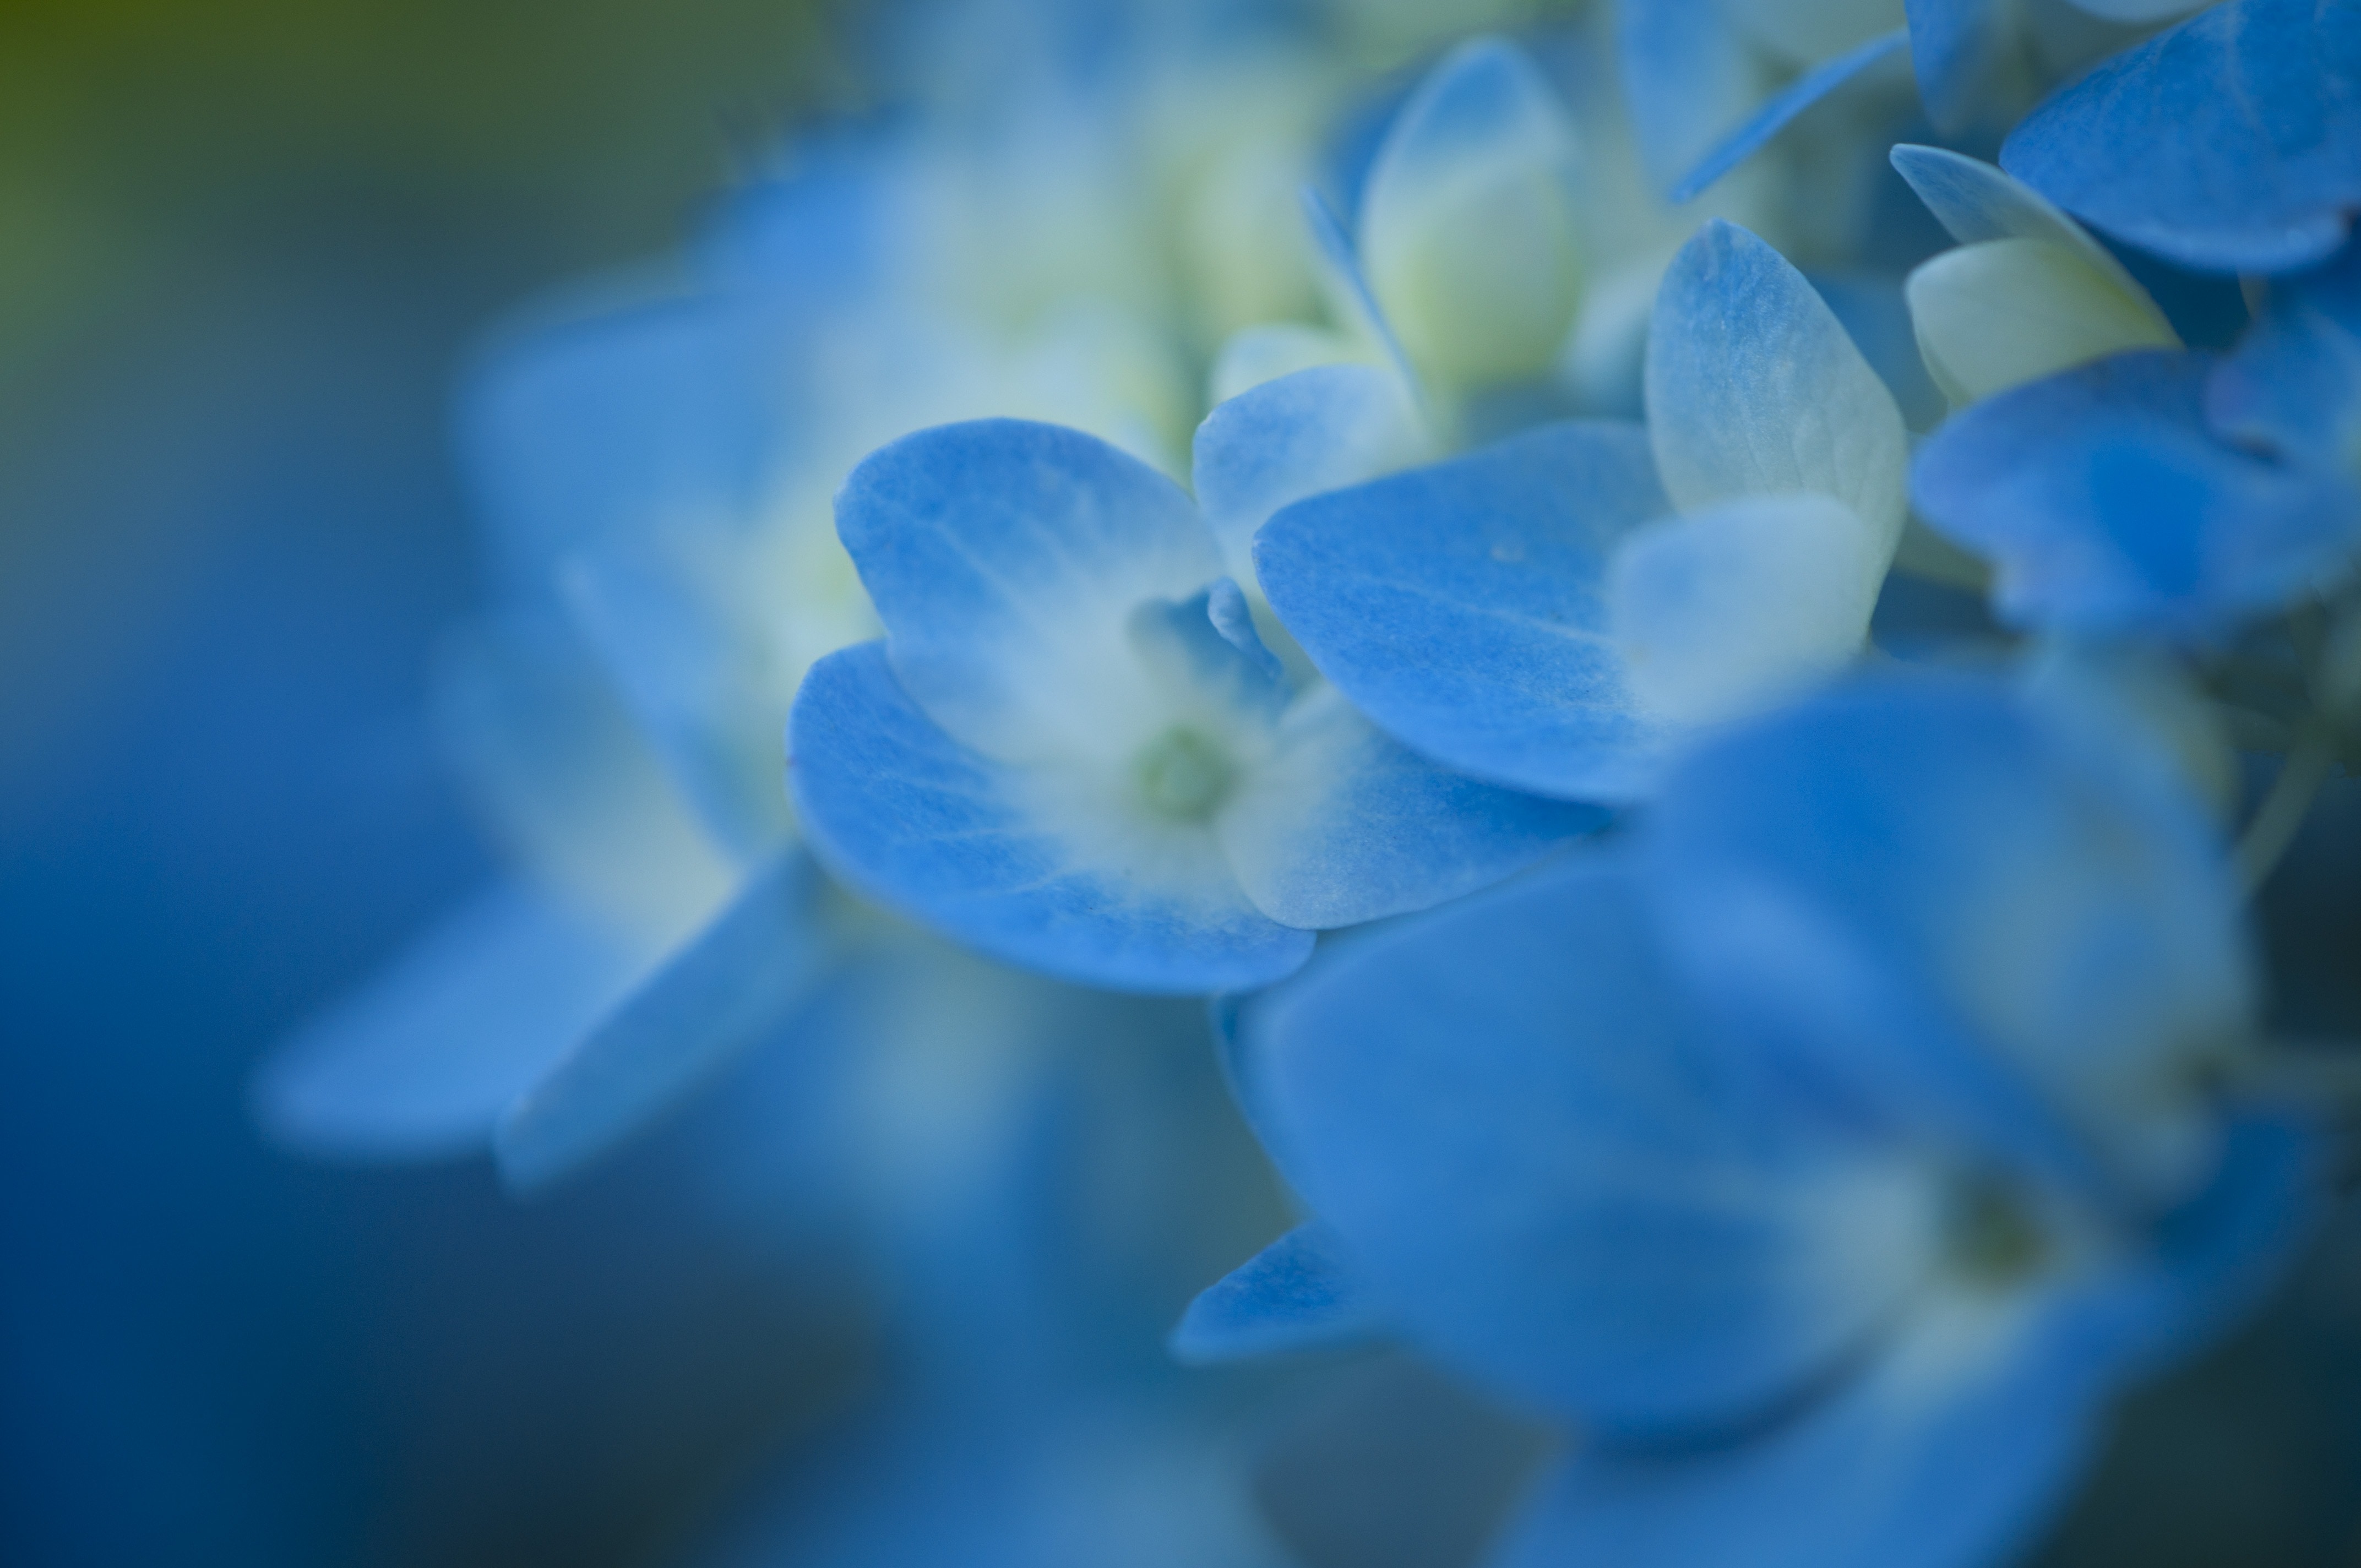 blue petaled flowers